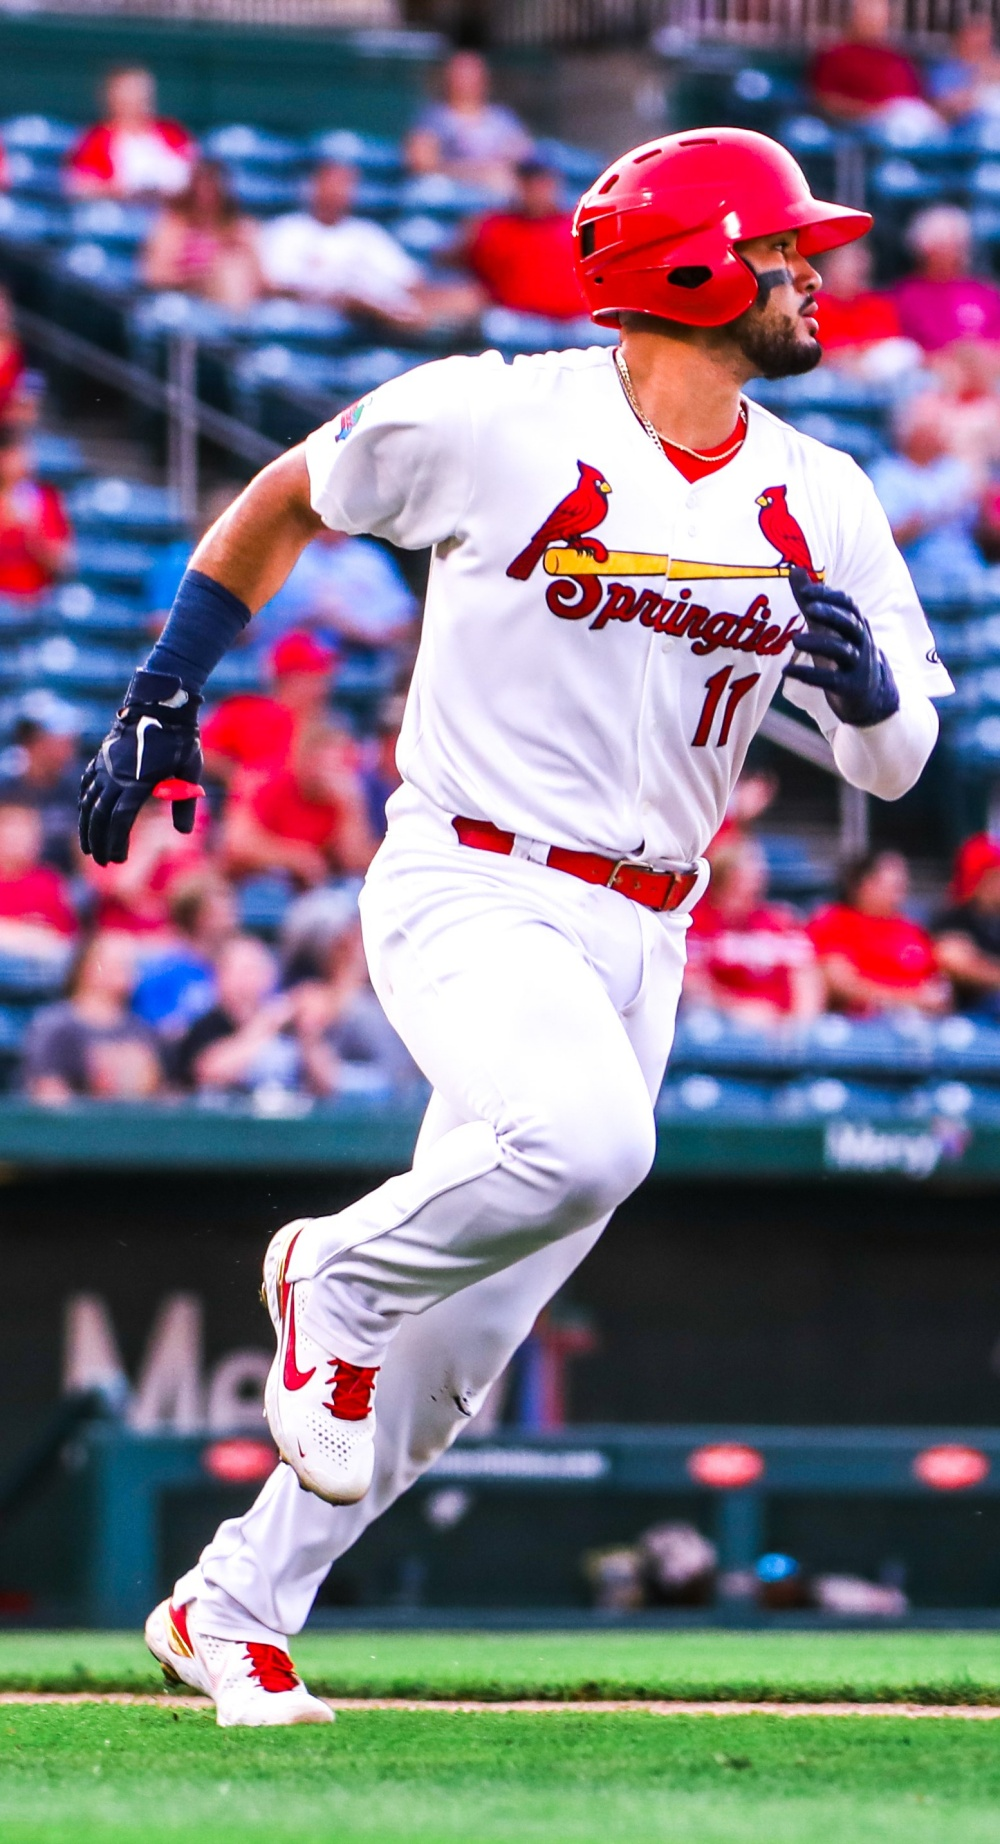 Ivan Herrerra, wearing a Springfield Cardinals uniform, runs toward first base after hitting the ball during a game at Hammons Field.